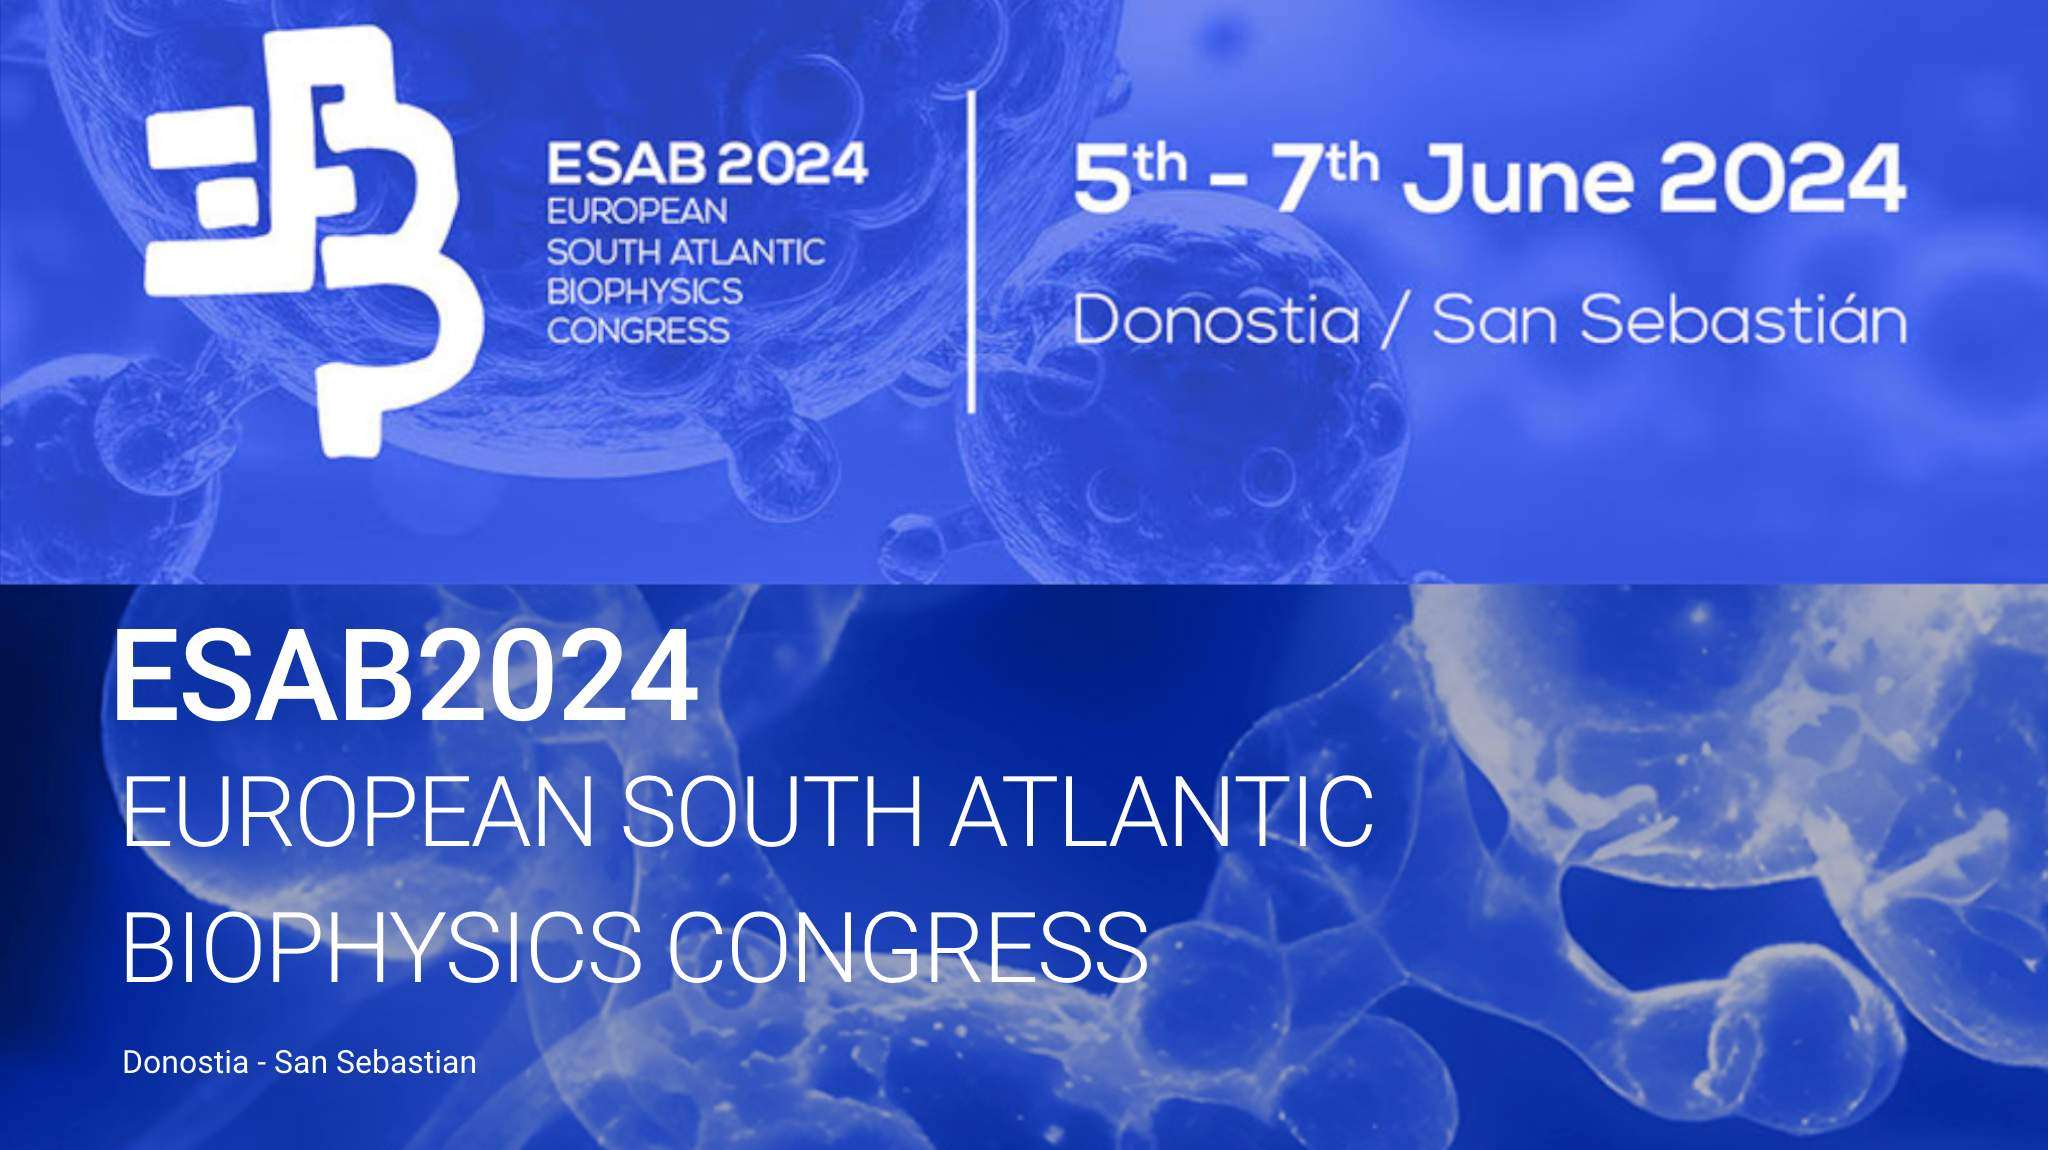 EUROPEAN SOUTH ATLANTIC BIOPHYSICS CONGRESS, 5th-7th June 2024